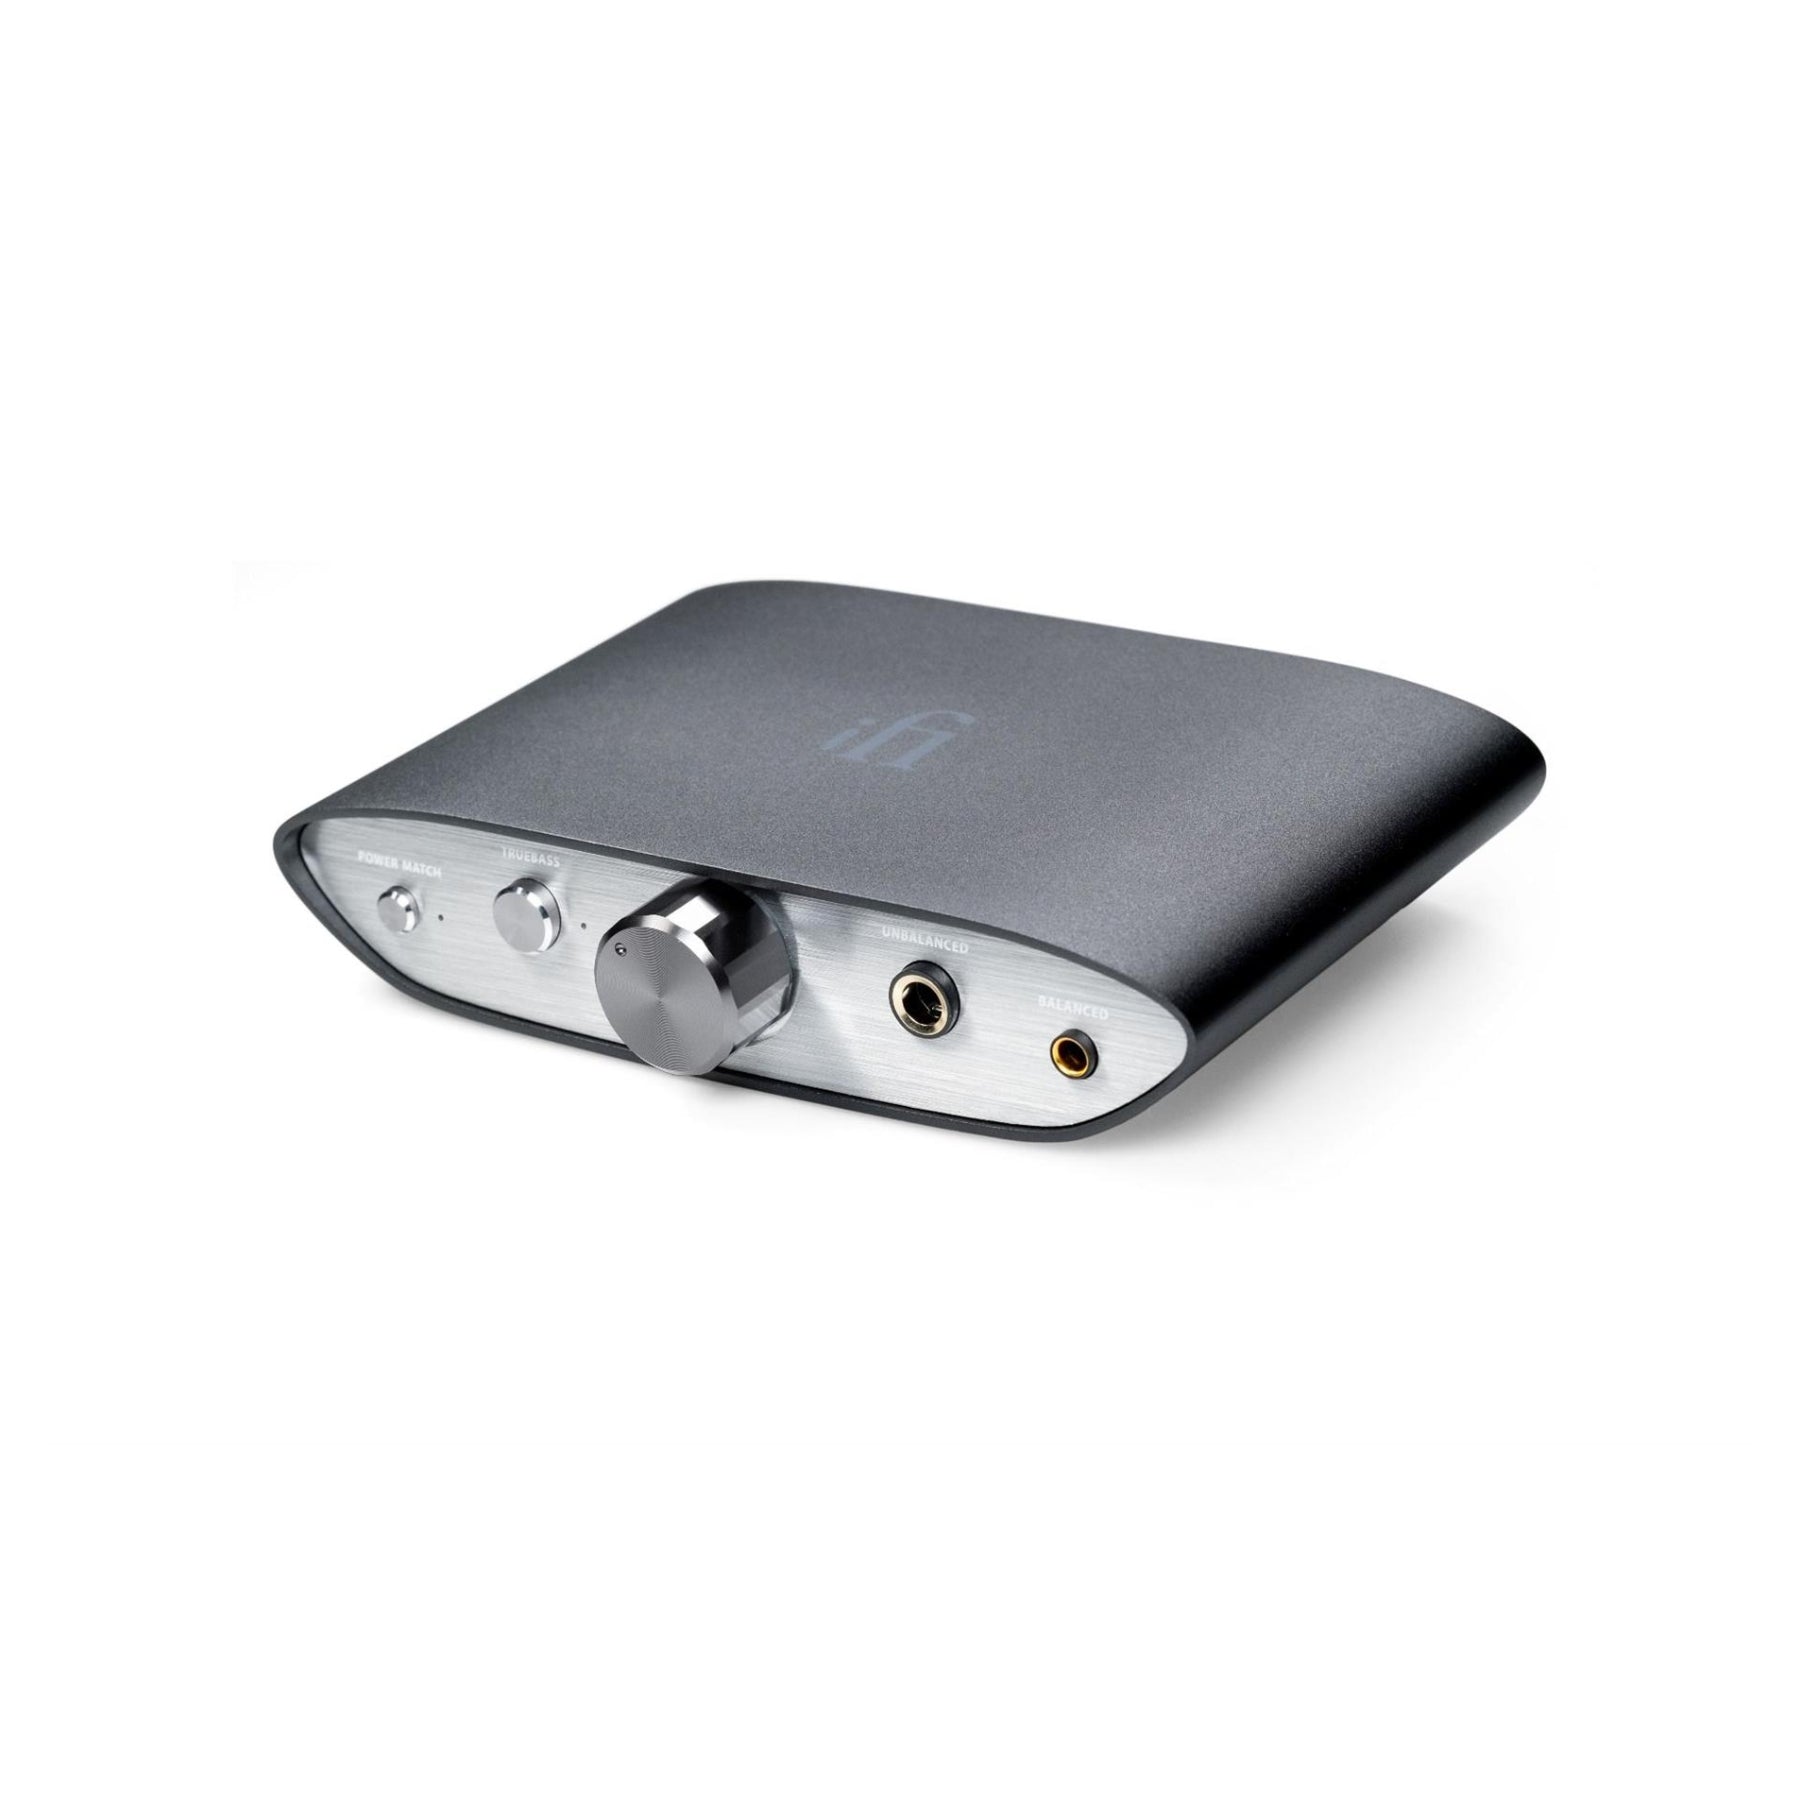 iFi Audio ZEN DAC V2 - HiFi Digital to Analog Converter and Amp